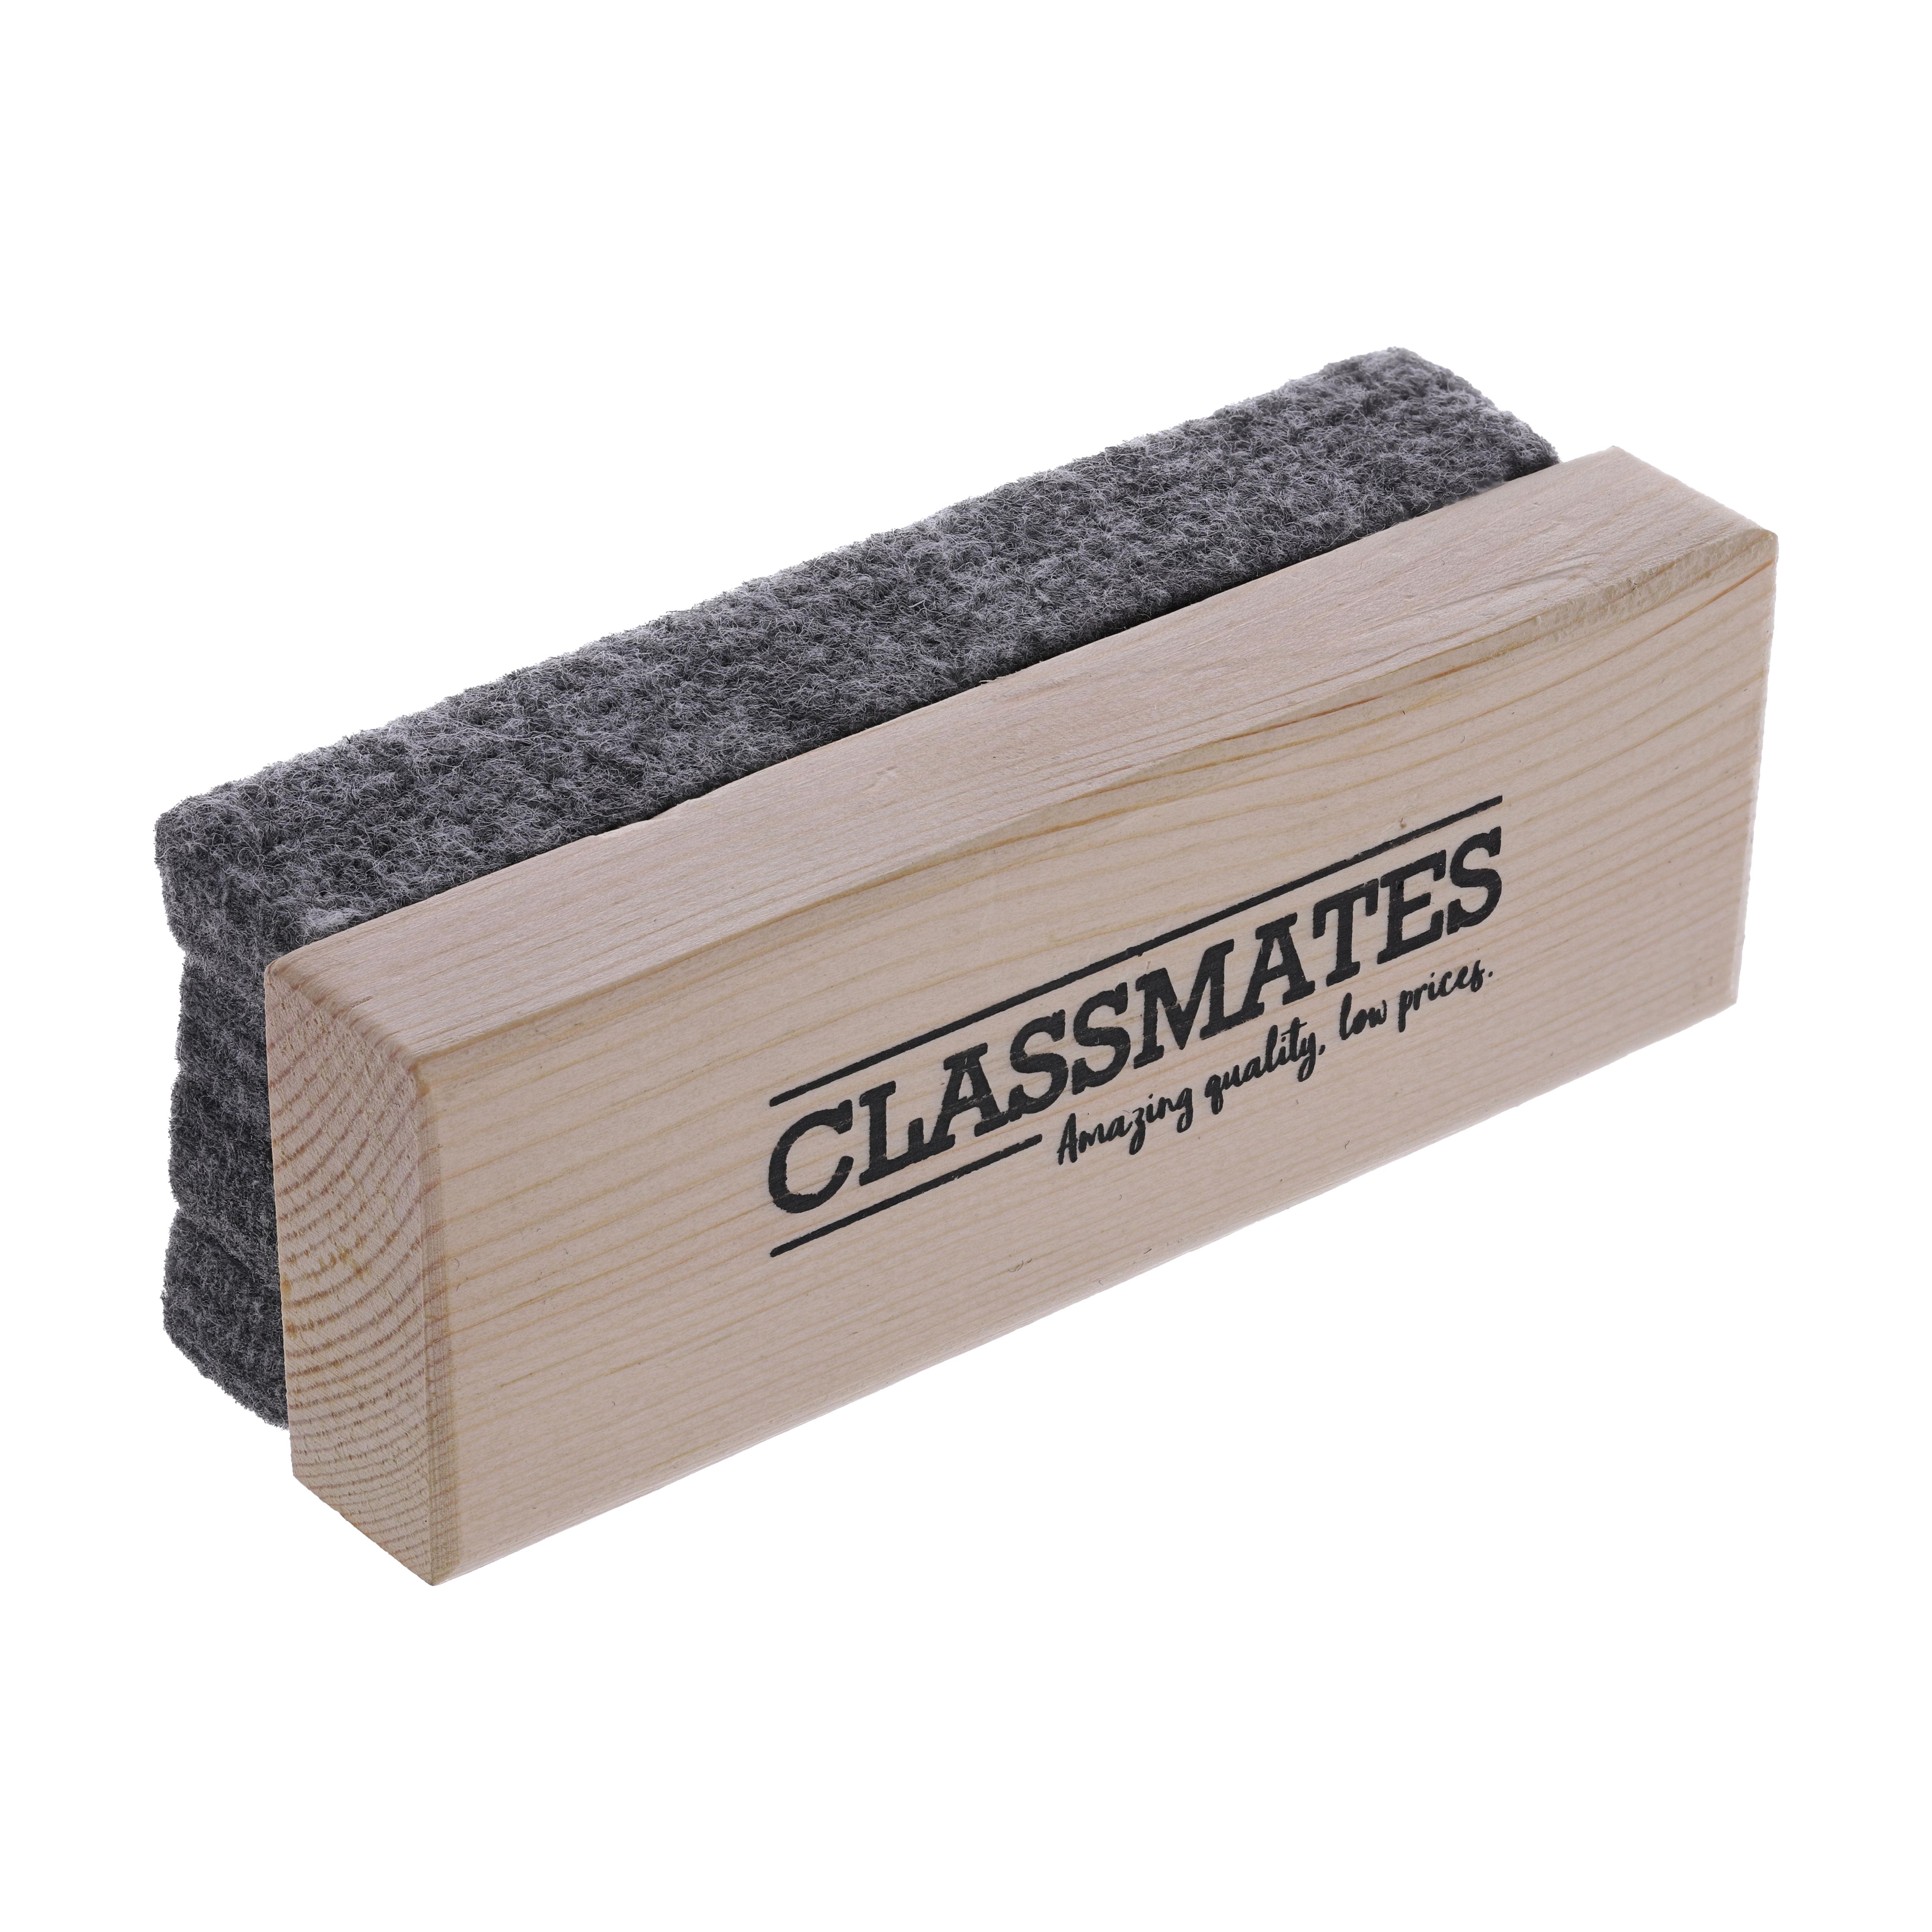 Wooden Handle Board Eraser